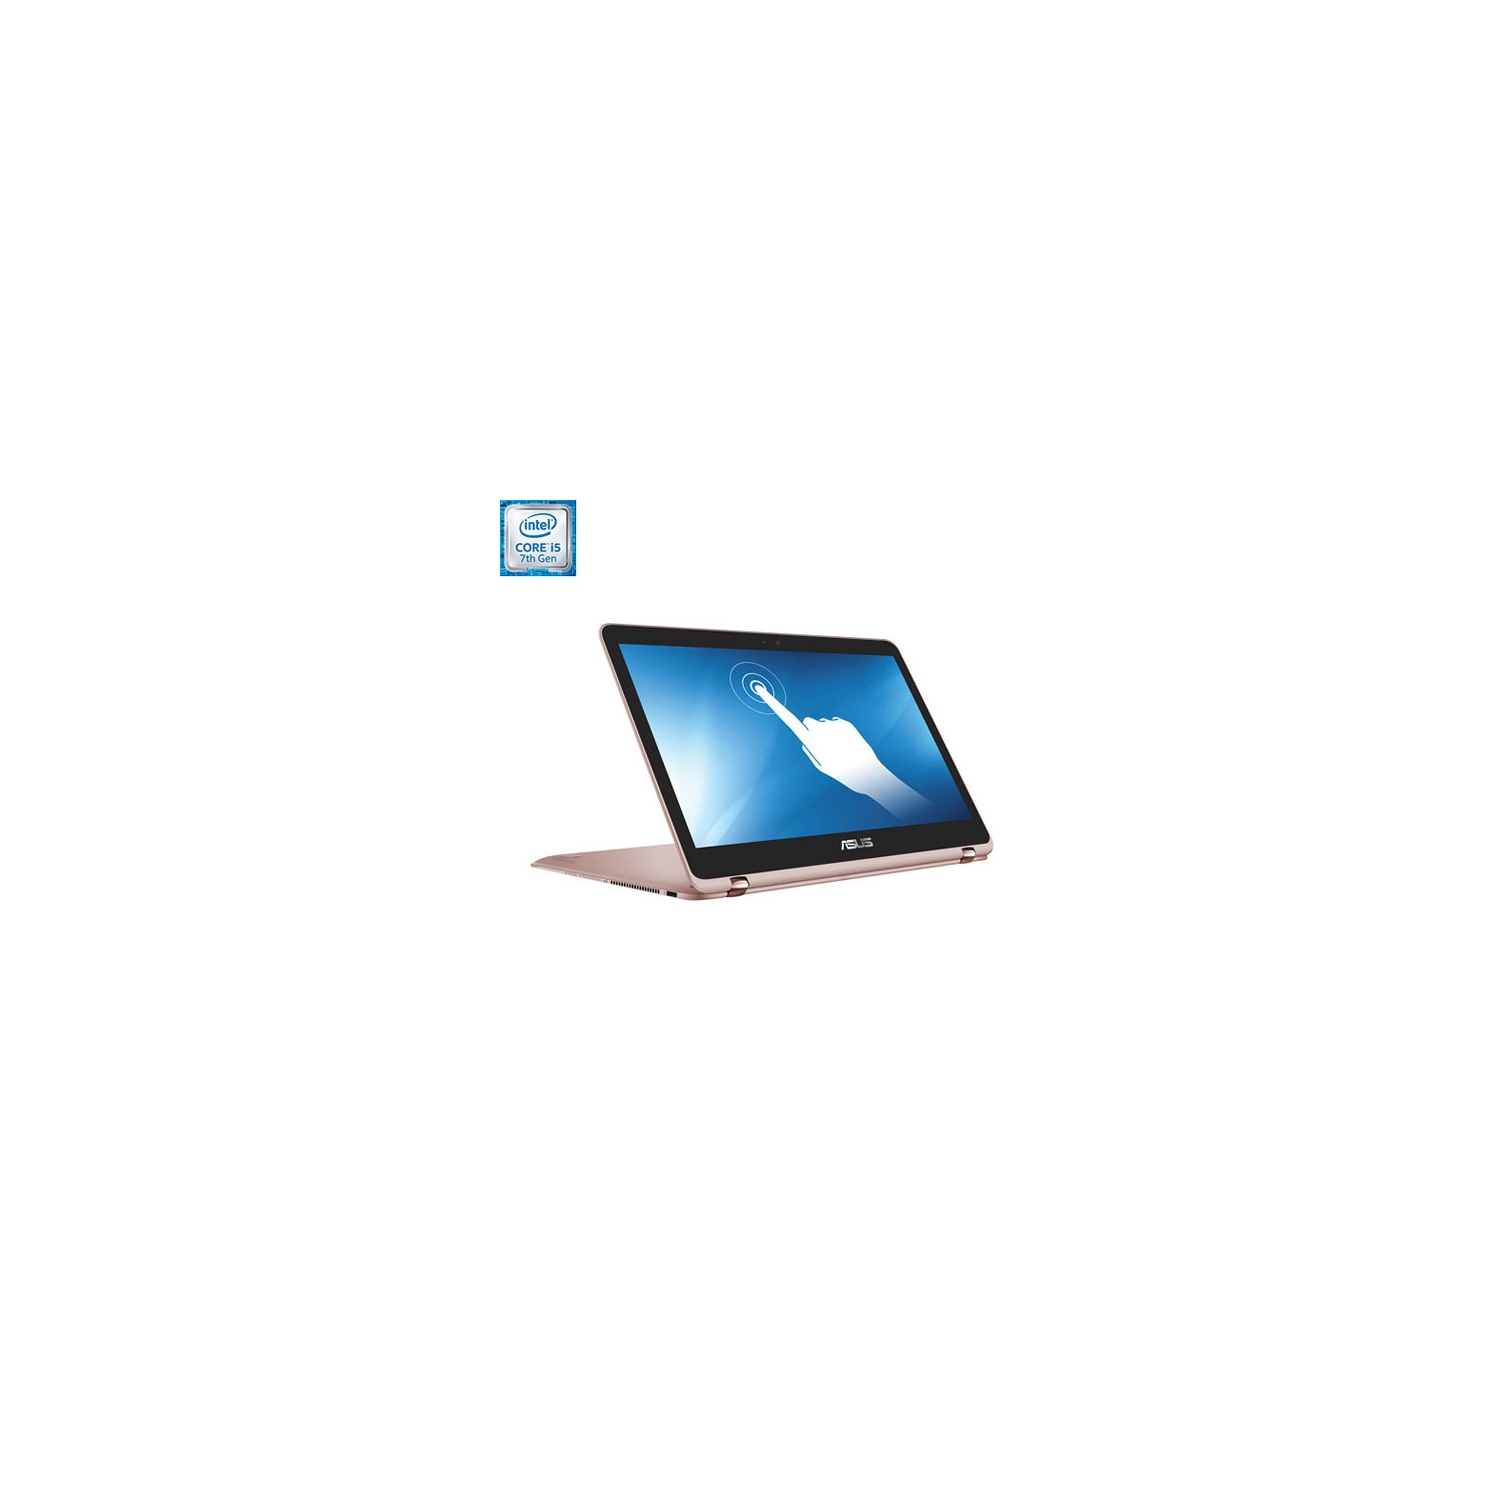 Refurbished (Fair) - ASUS ZenBook Flip UX360UA 13.3" Touchscreen Laptop -Rose Gold (Intel Core i5-7200U/256 SSD/8 DDR3 RAM)